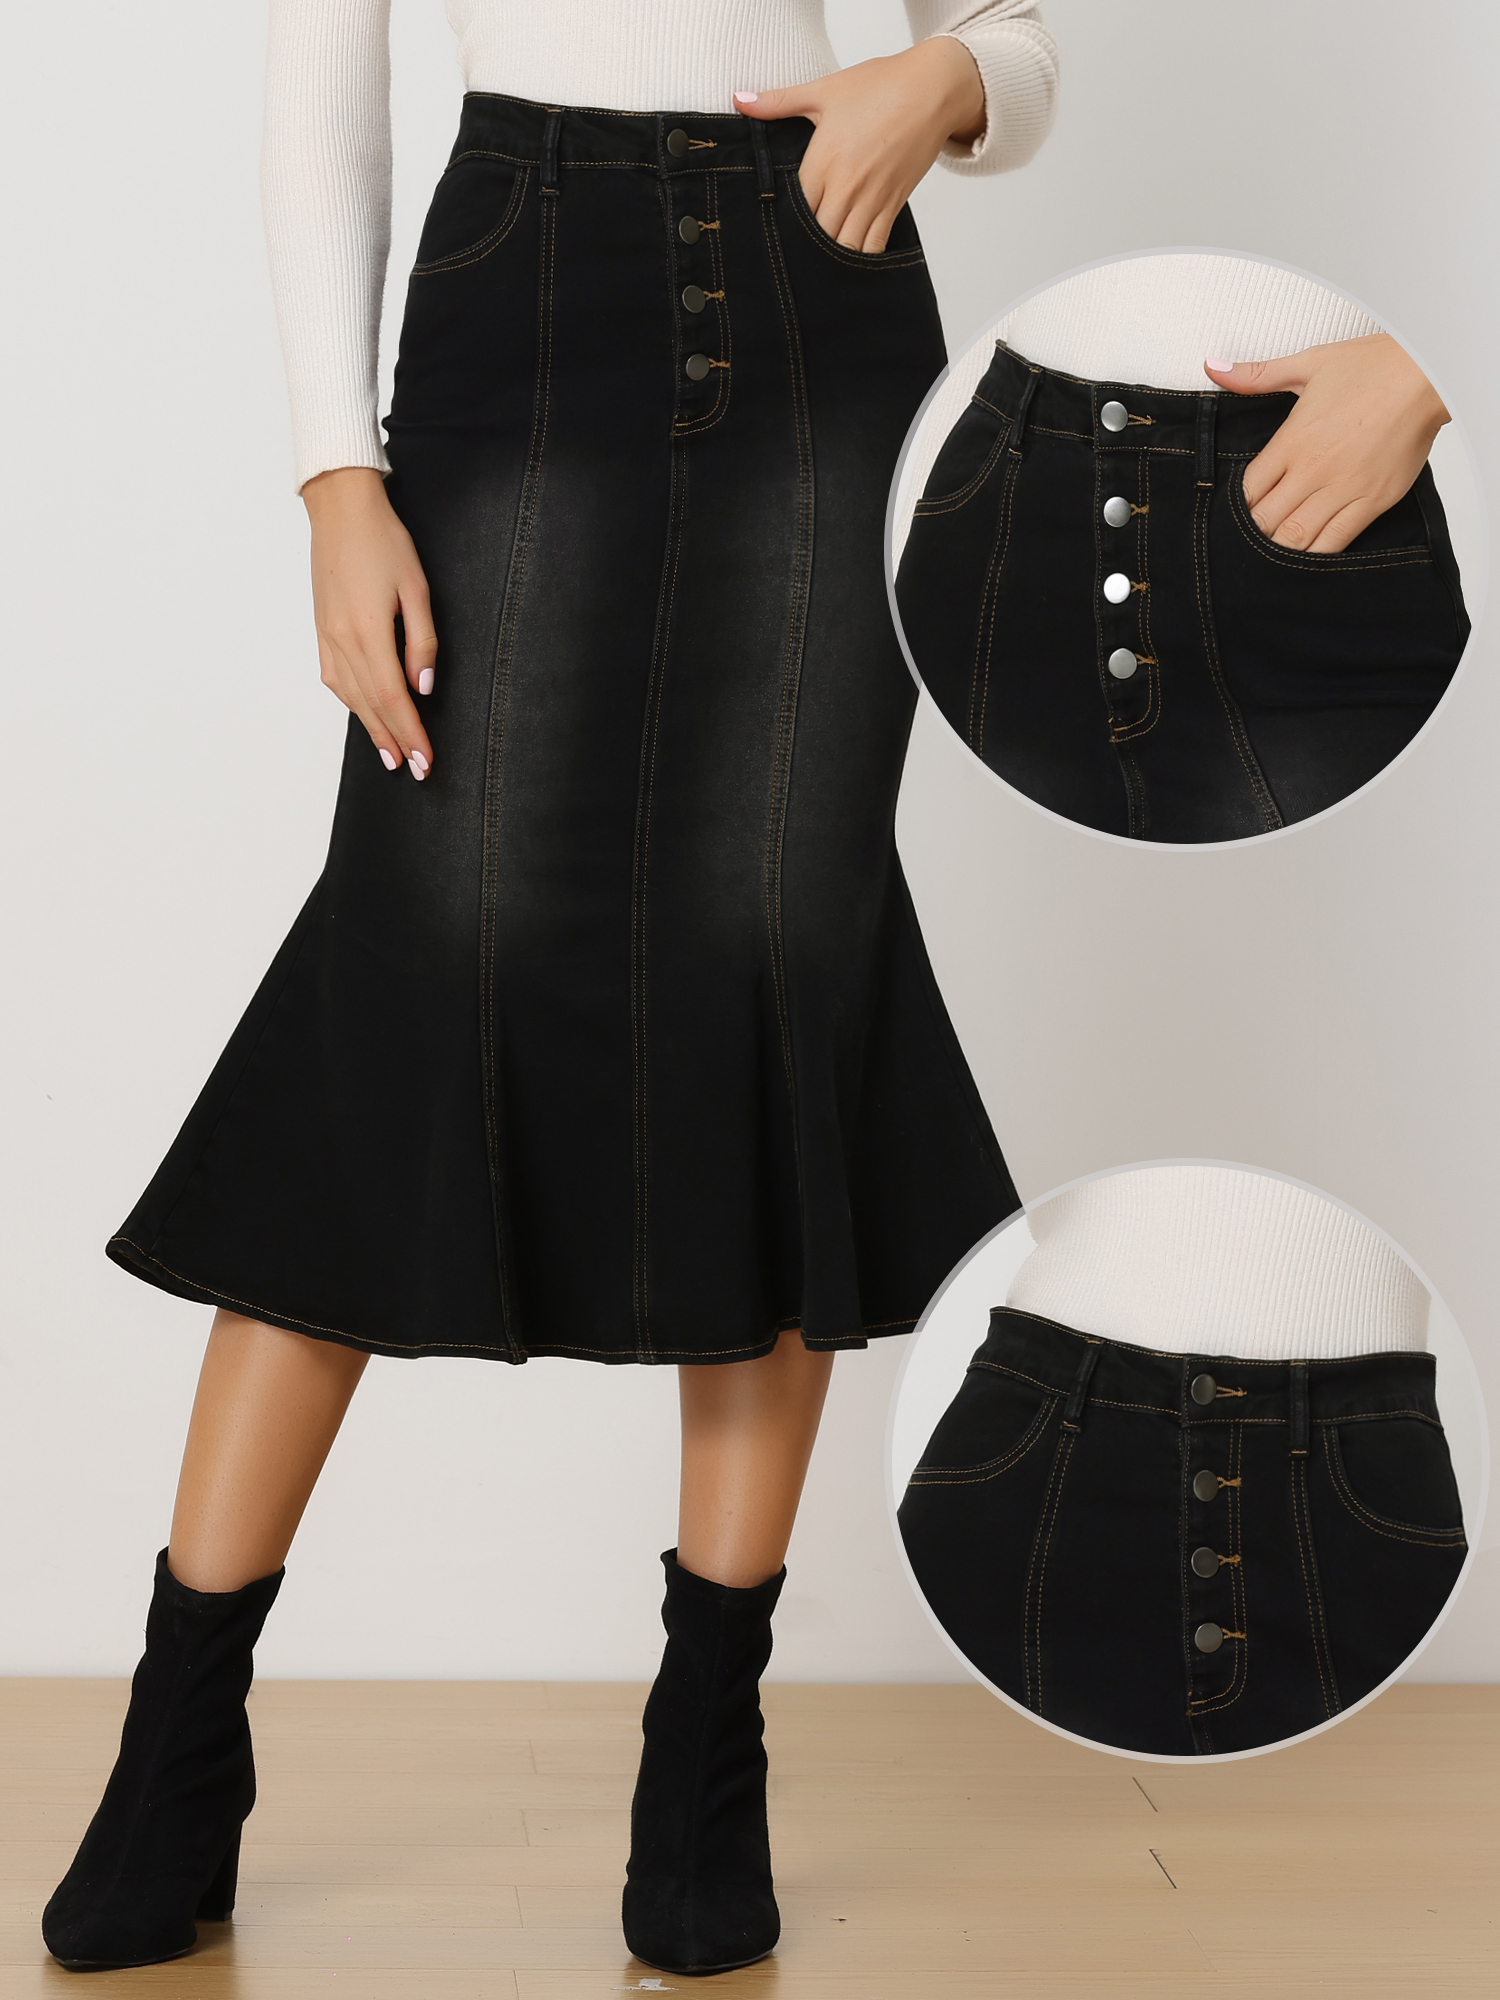 Unique Bargains Fishtail Maxi Denim Skirt for Women's Distressed Skirt